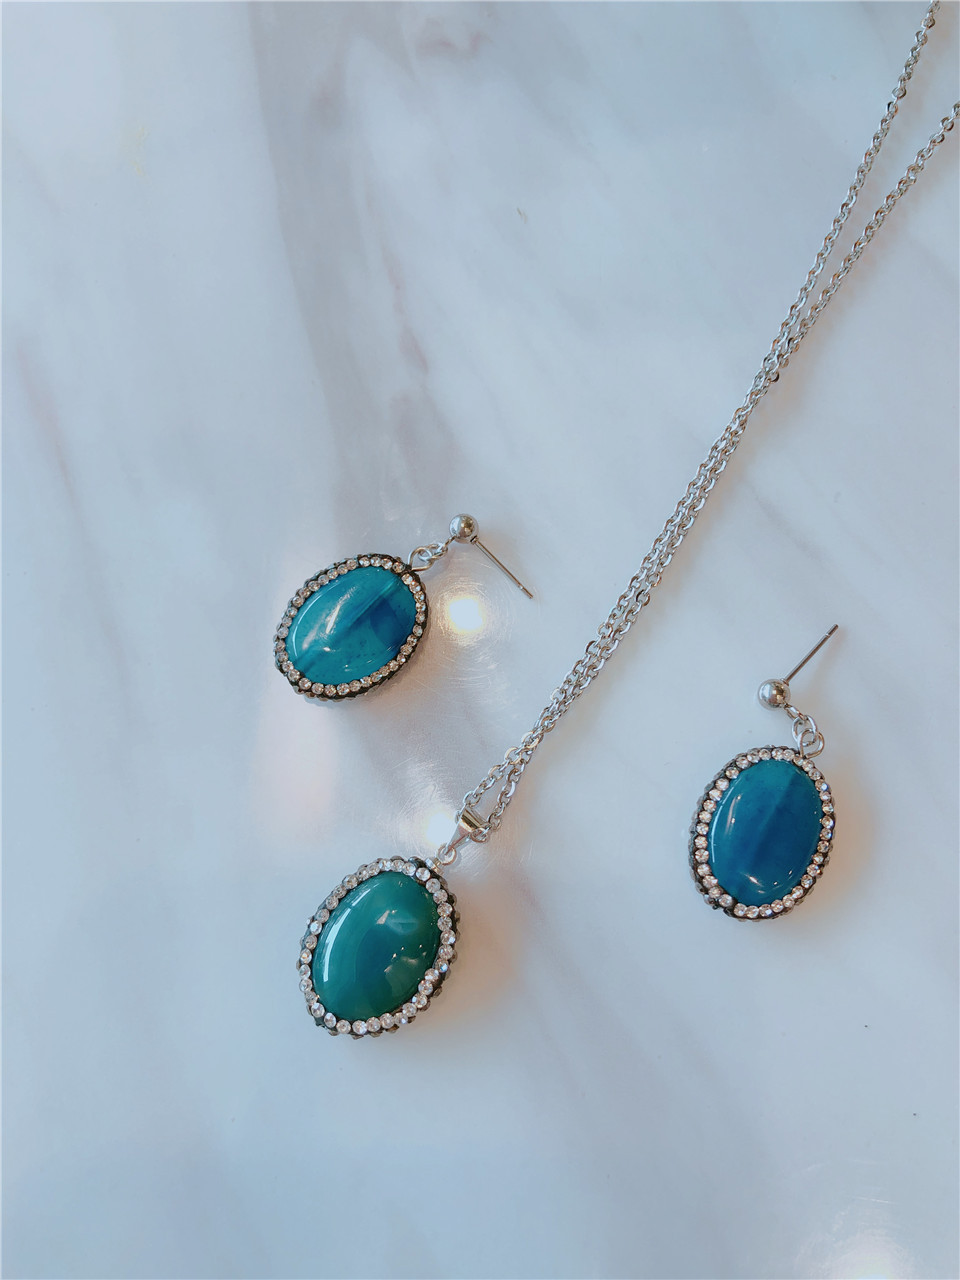 A set of blue earrings (10x20mm, chain length 40cm